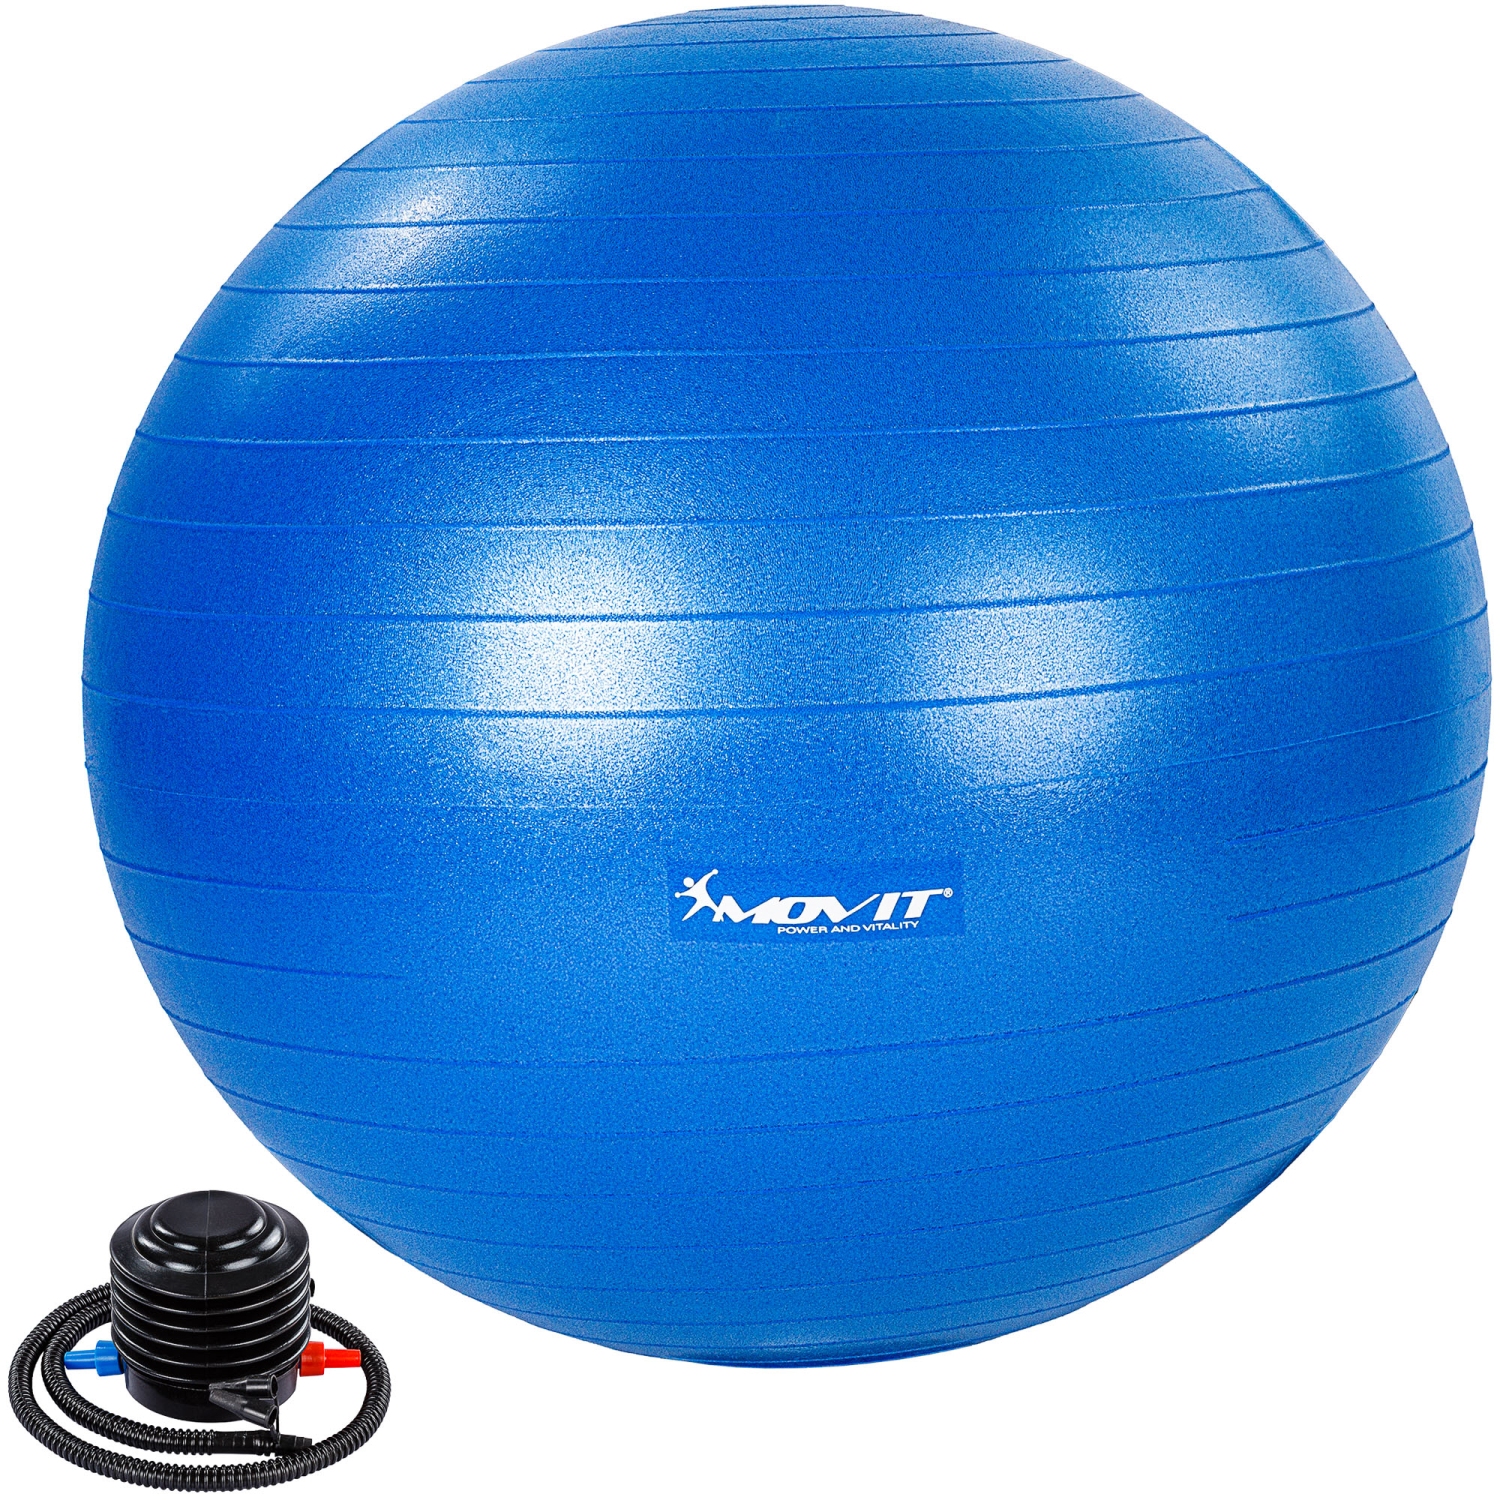 Yoga bal – Pilates bal – Fitness bal – 85 cm – Inclusief pomp – Blauw